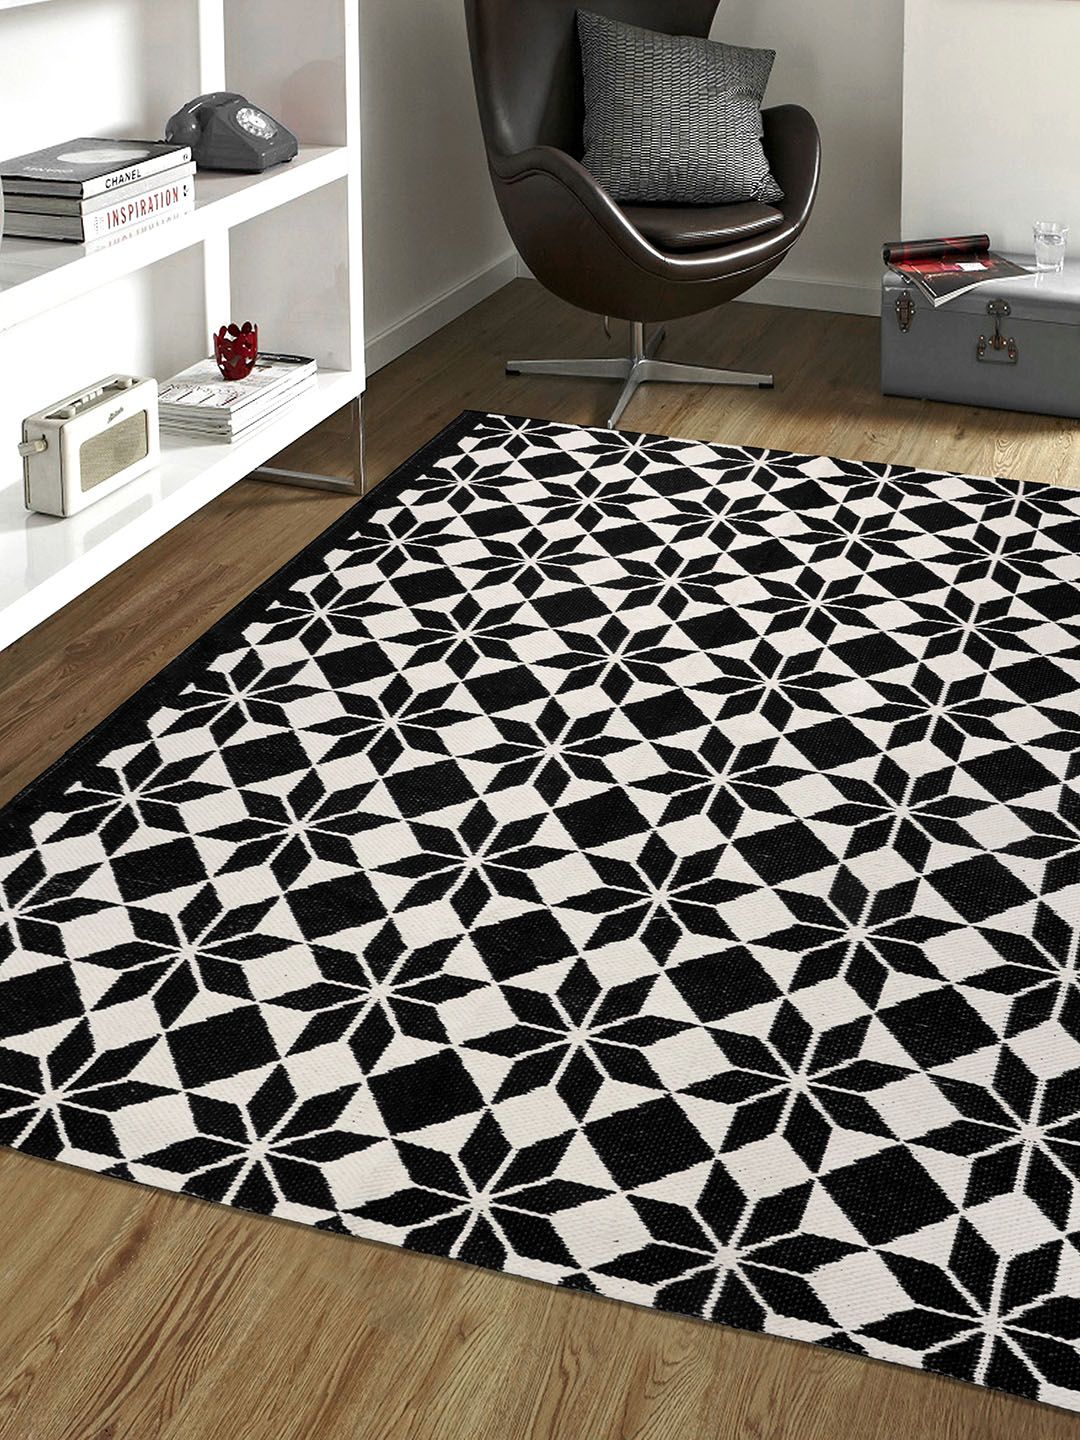 Saral Home Black & White Geometric Printed Rug Price in India